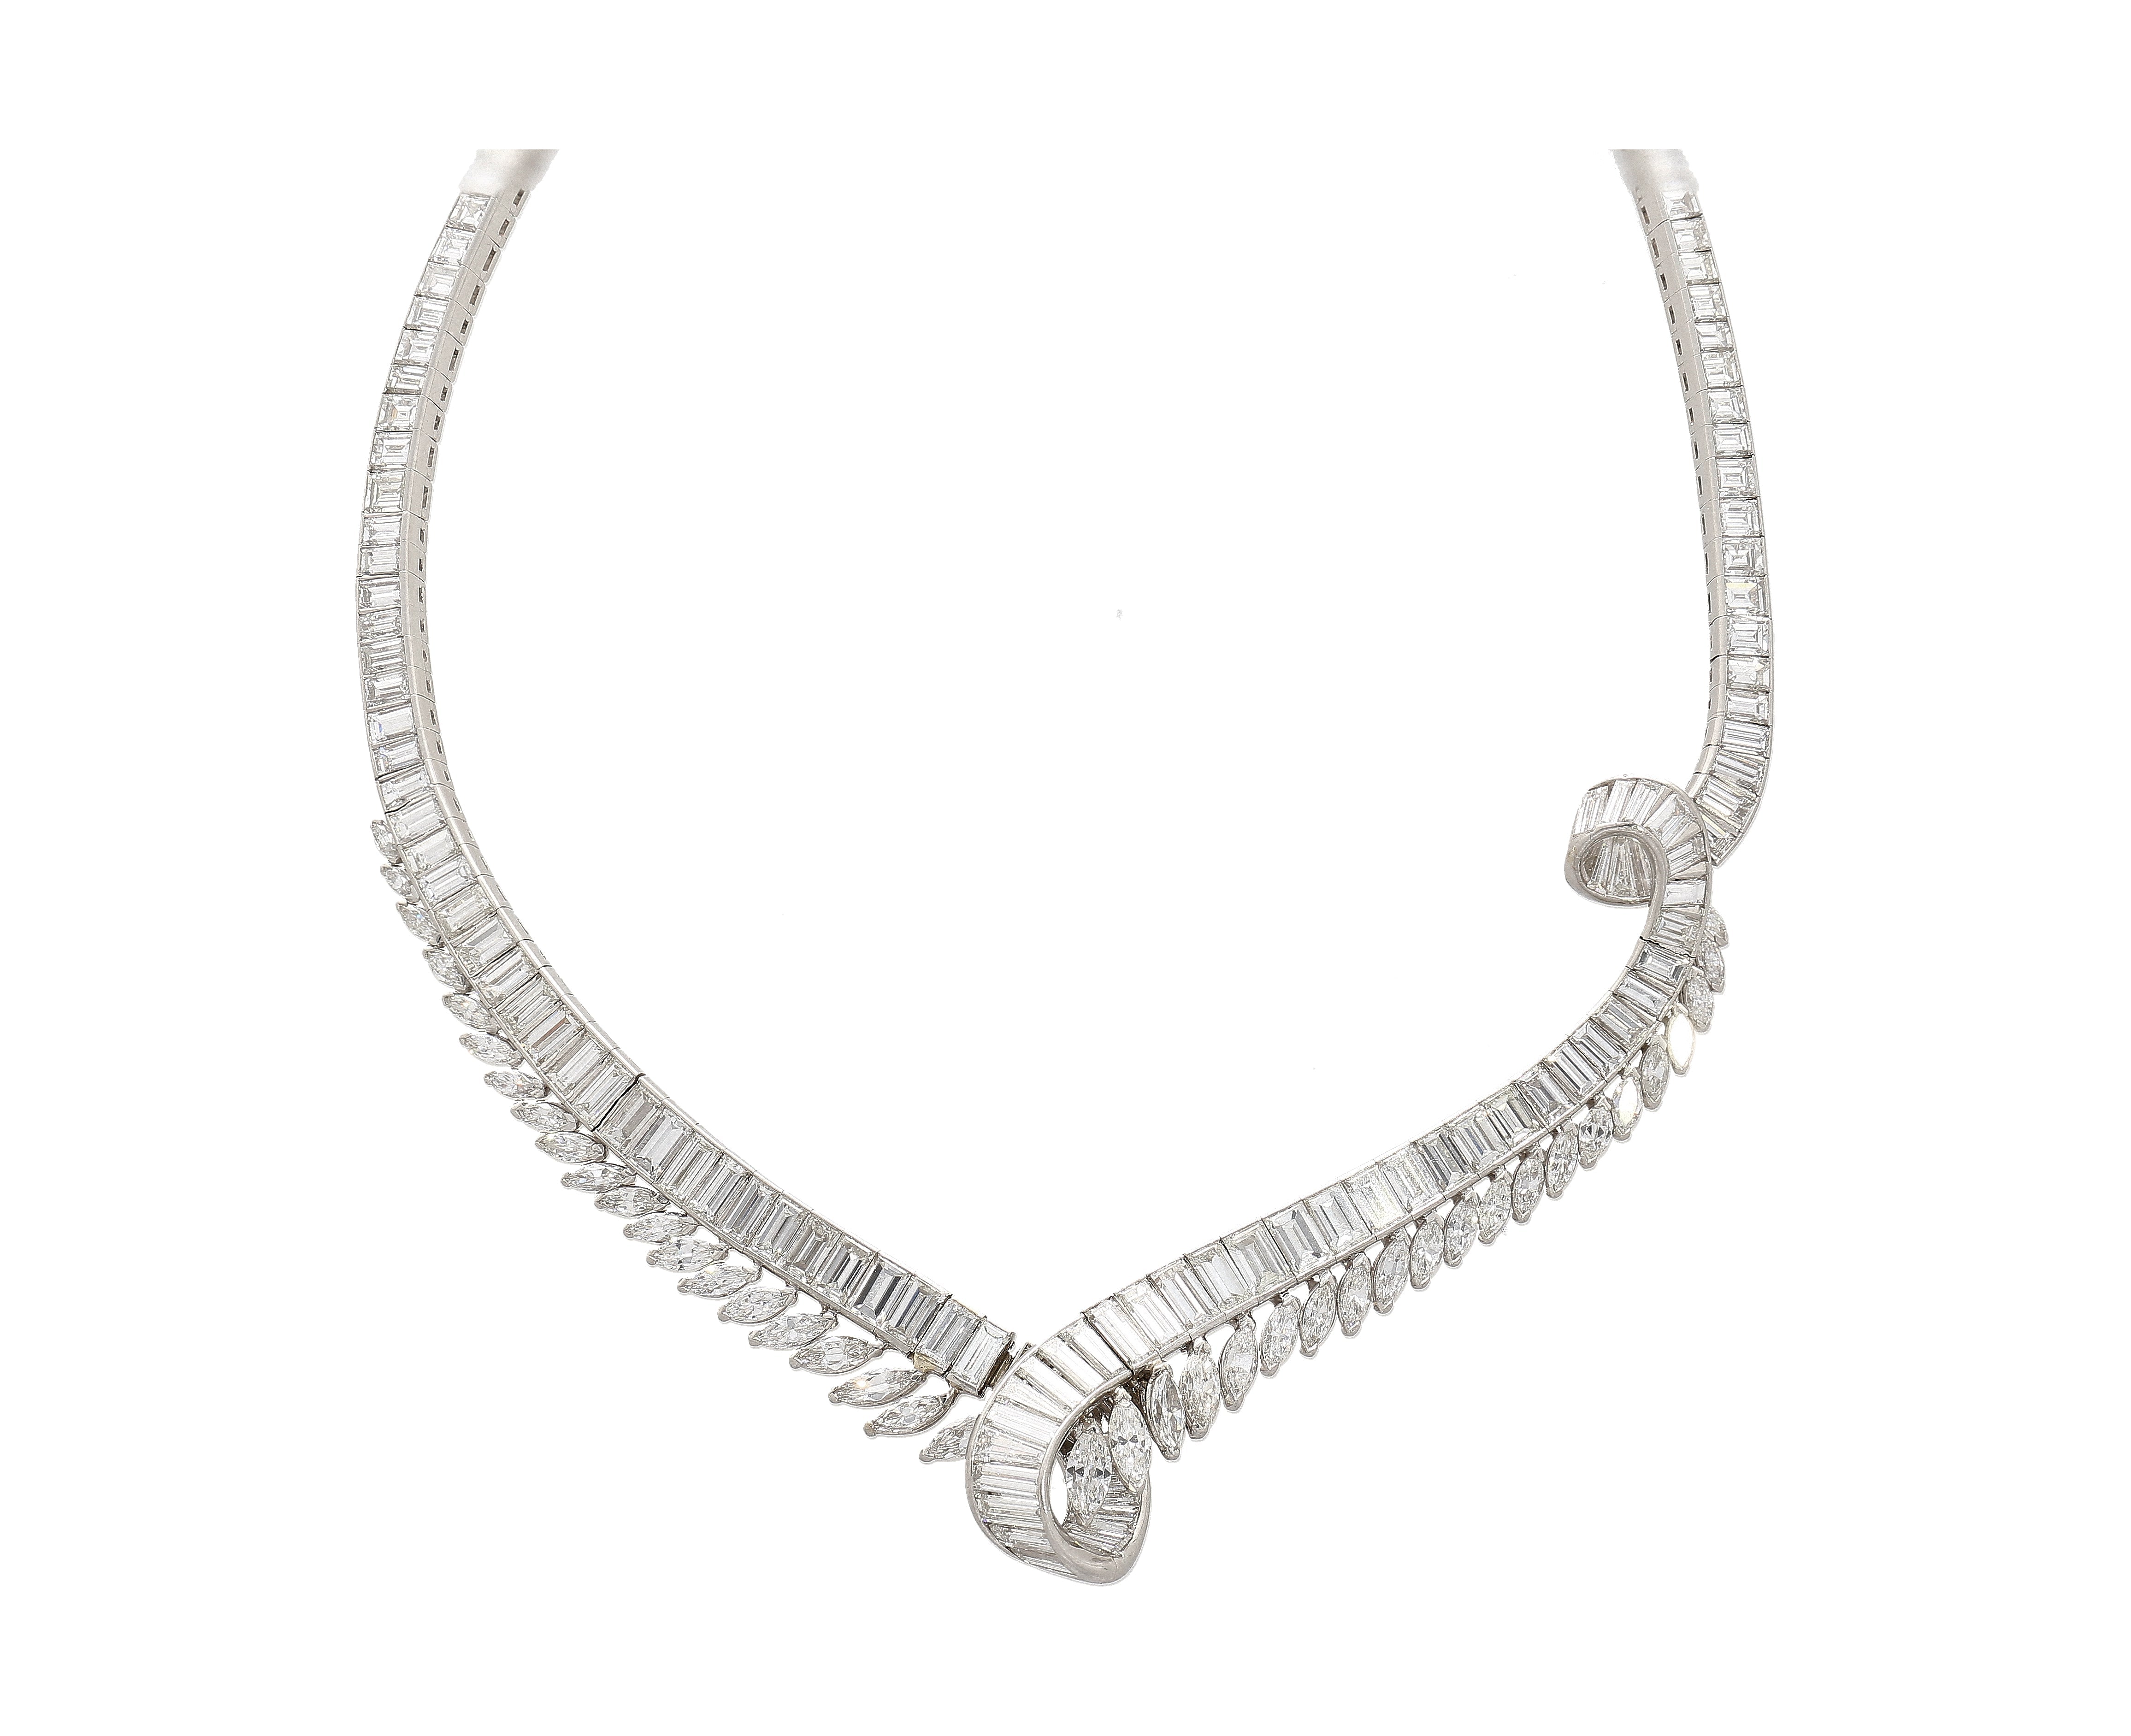 40-Carat-Marquise-And-Baguette-Cut-Diamond-Chandelier-Platinum-Choker-Necklace-Chokers-2.jpg